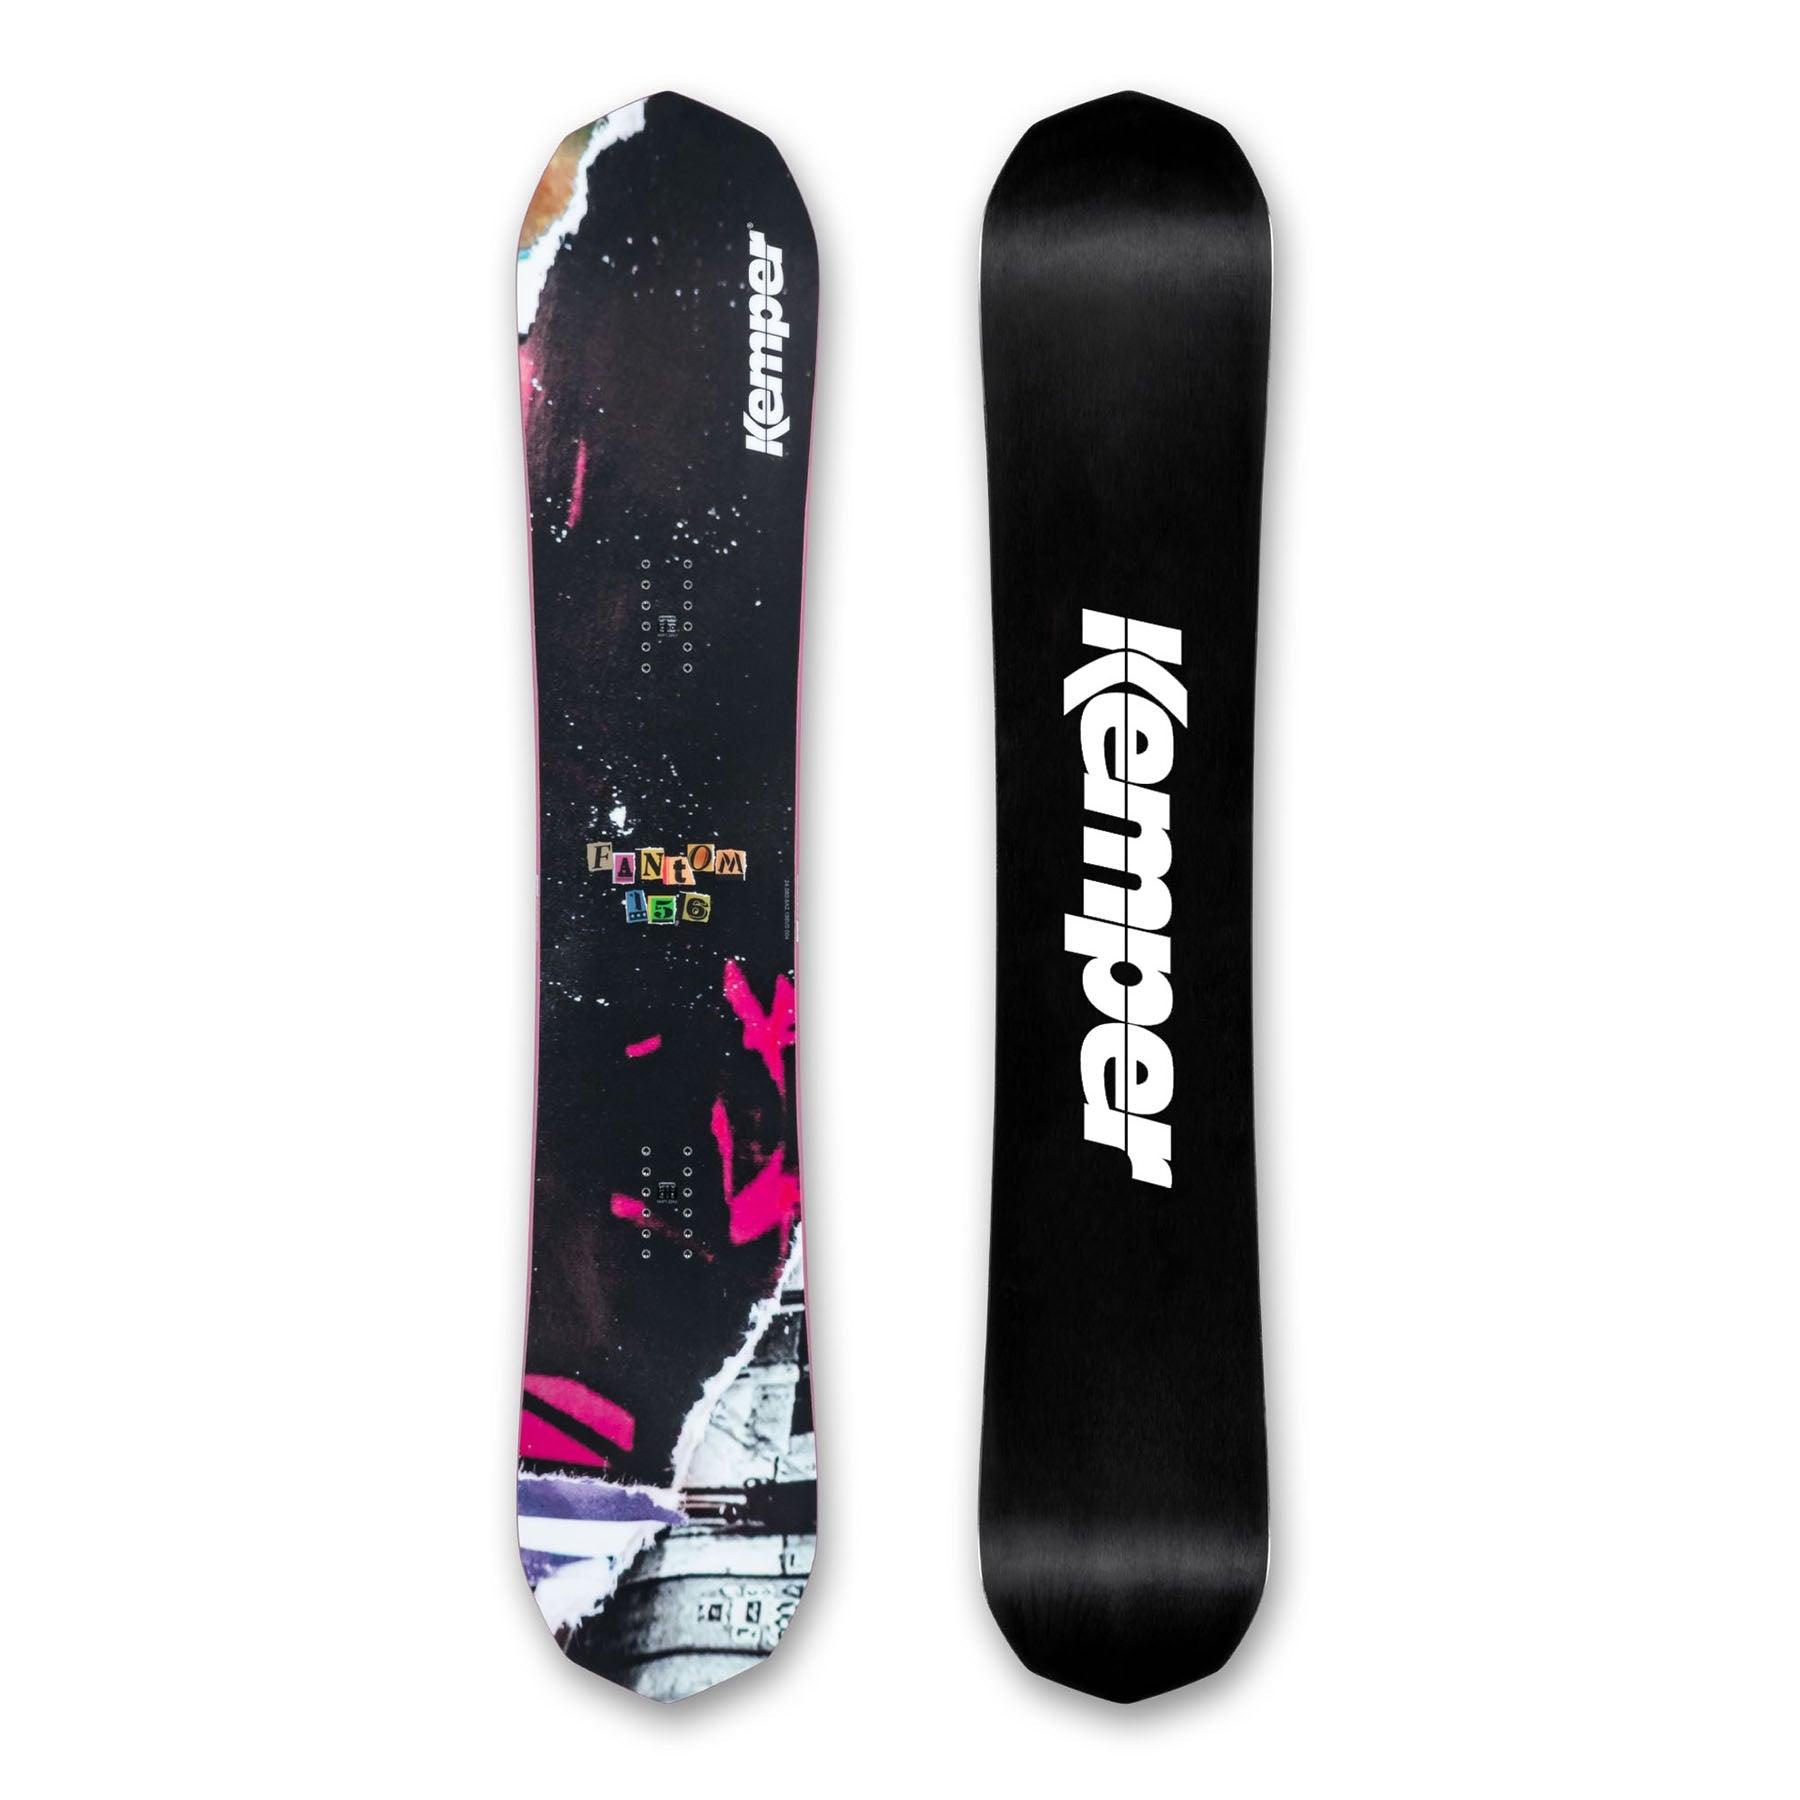 Kemper Fantom Snowboard | All-Mountain